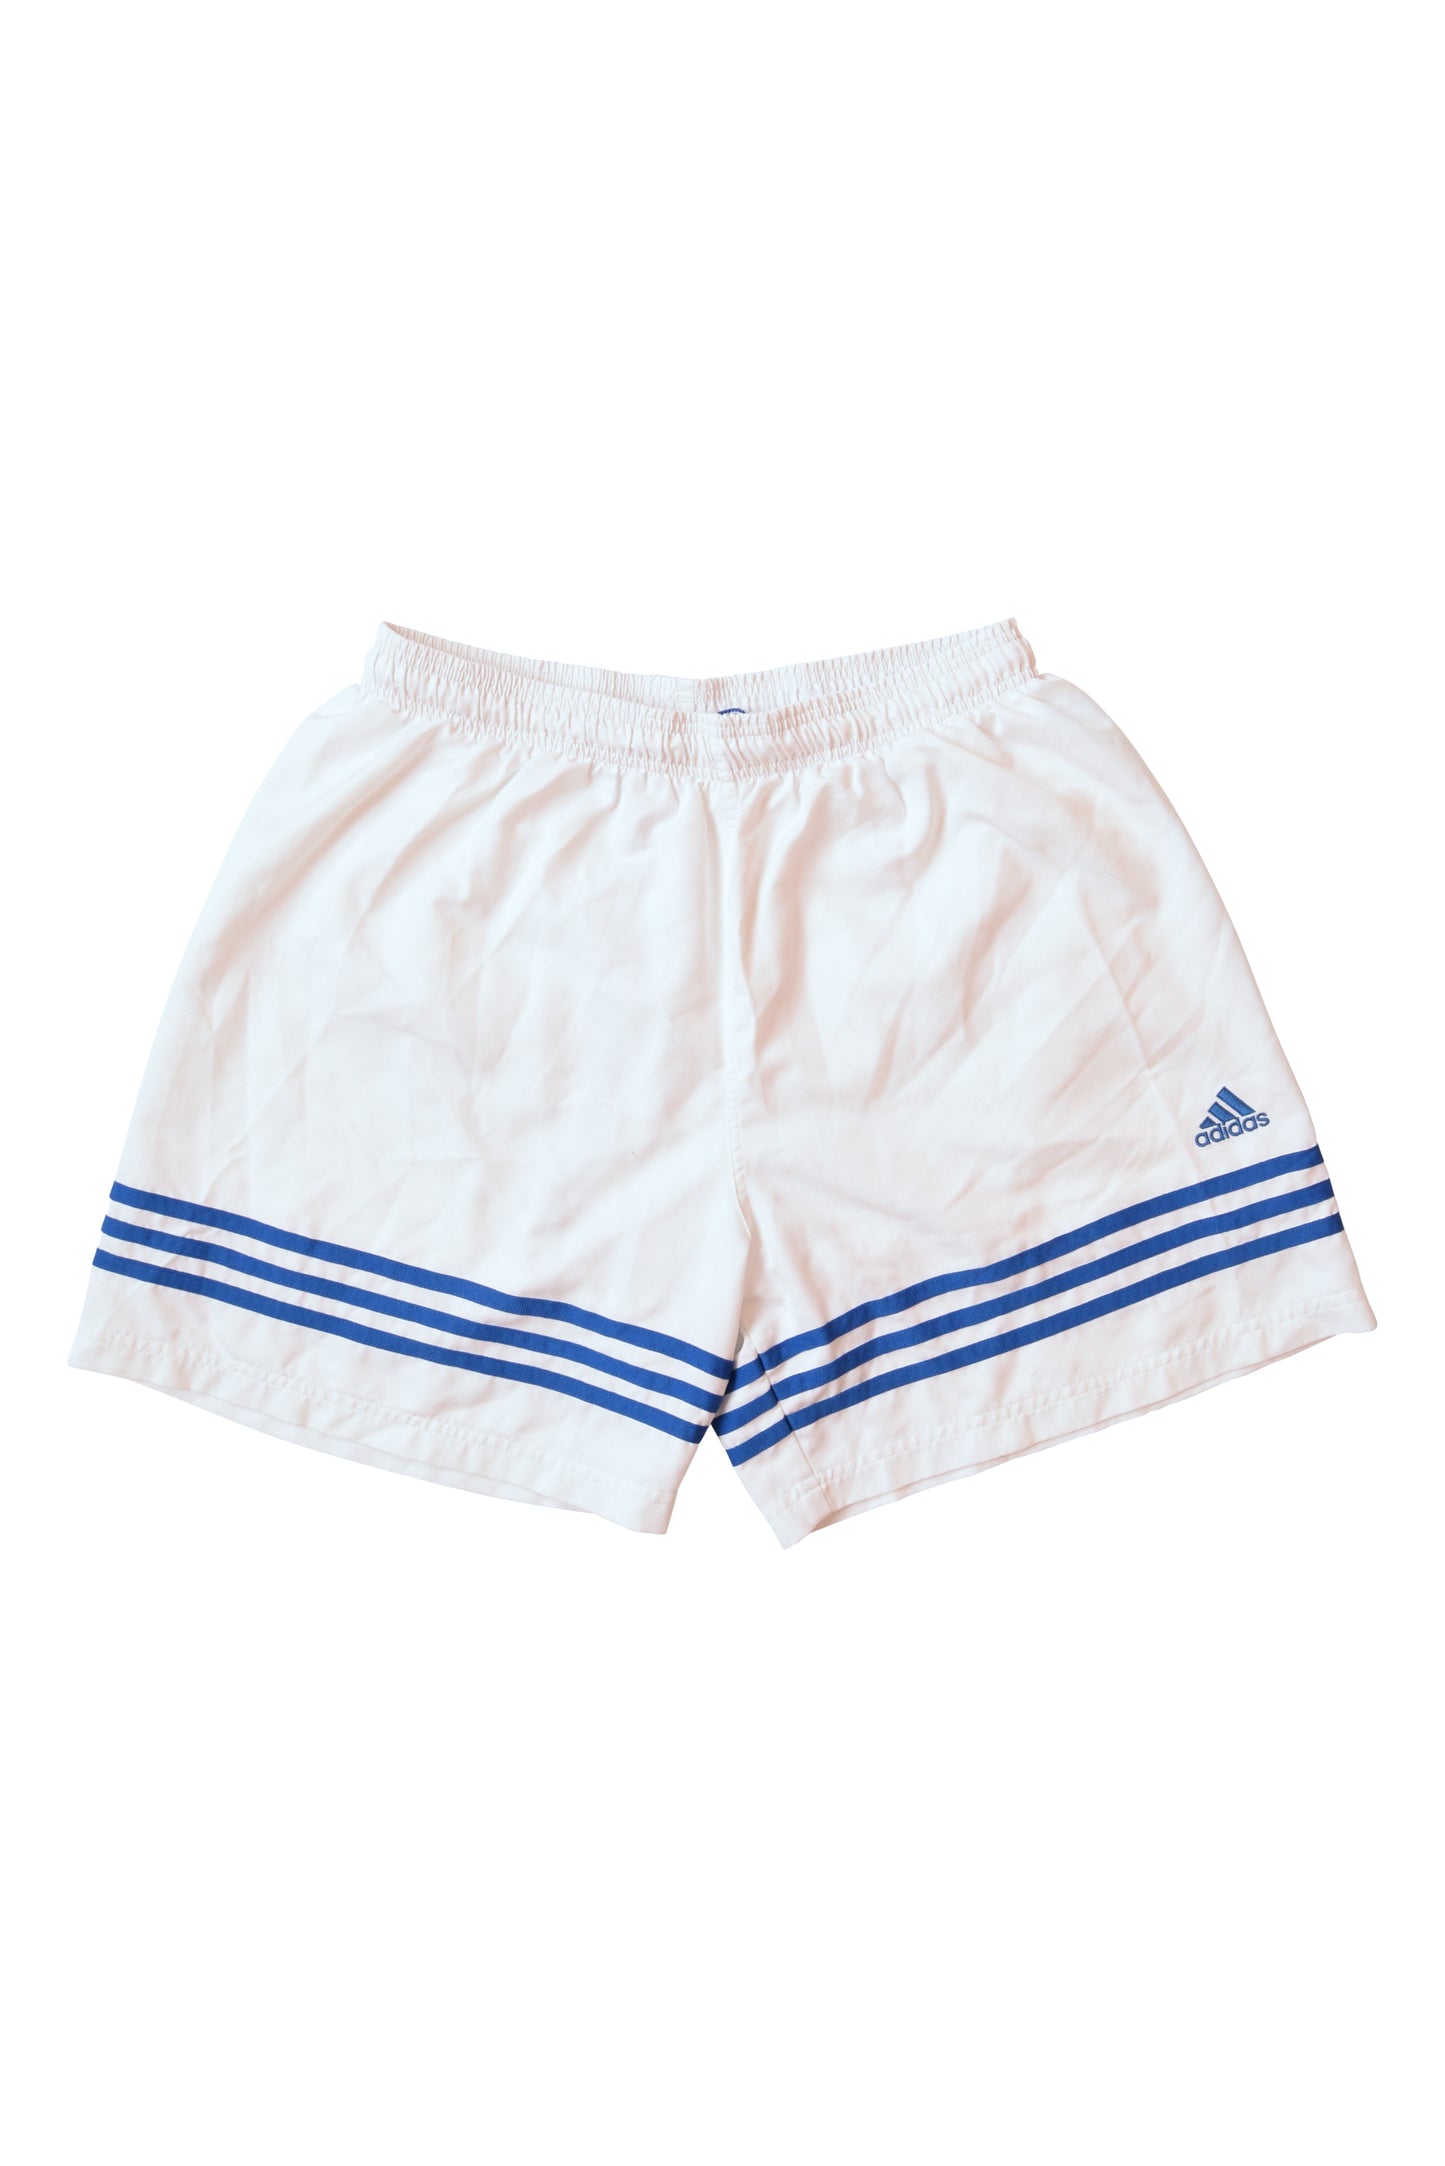 Vintage Adidas Climate Shorts Size XL